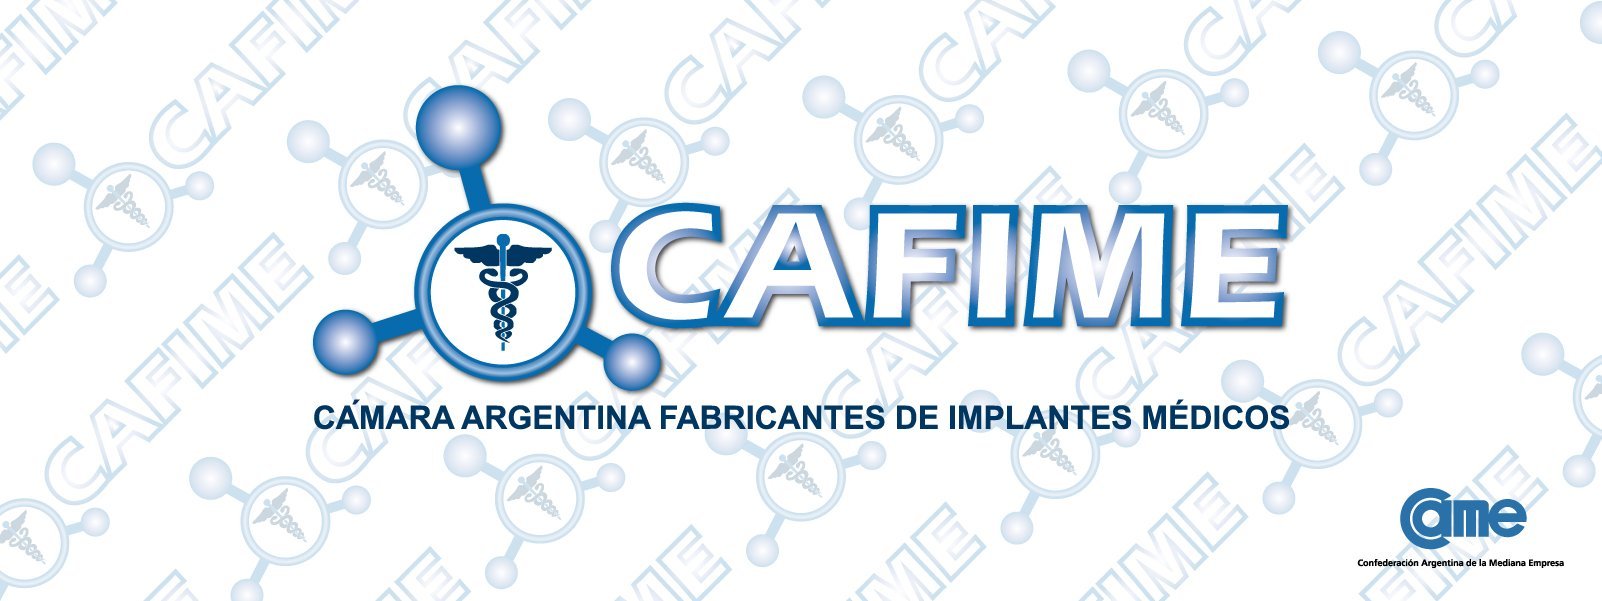 CAMARA ARGENTINA DE FABRICANTES DE IMPLANTES MEDICOS